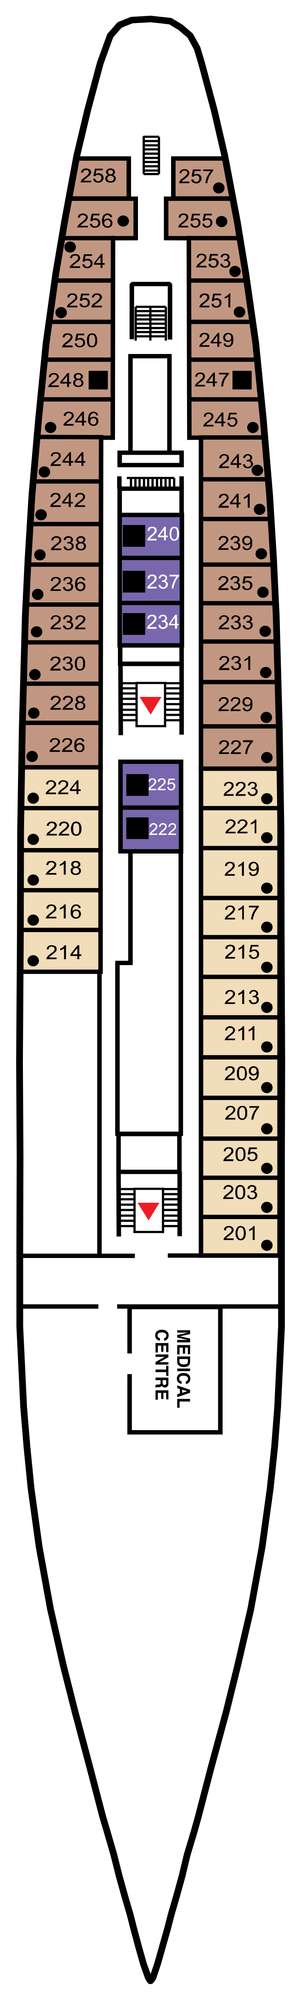 Deck plan for Astoria